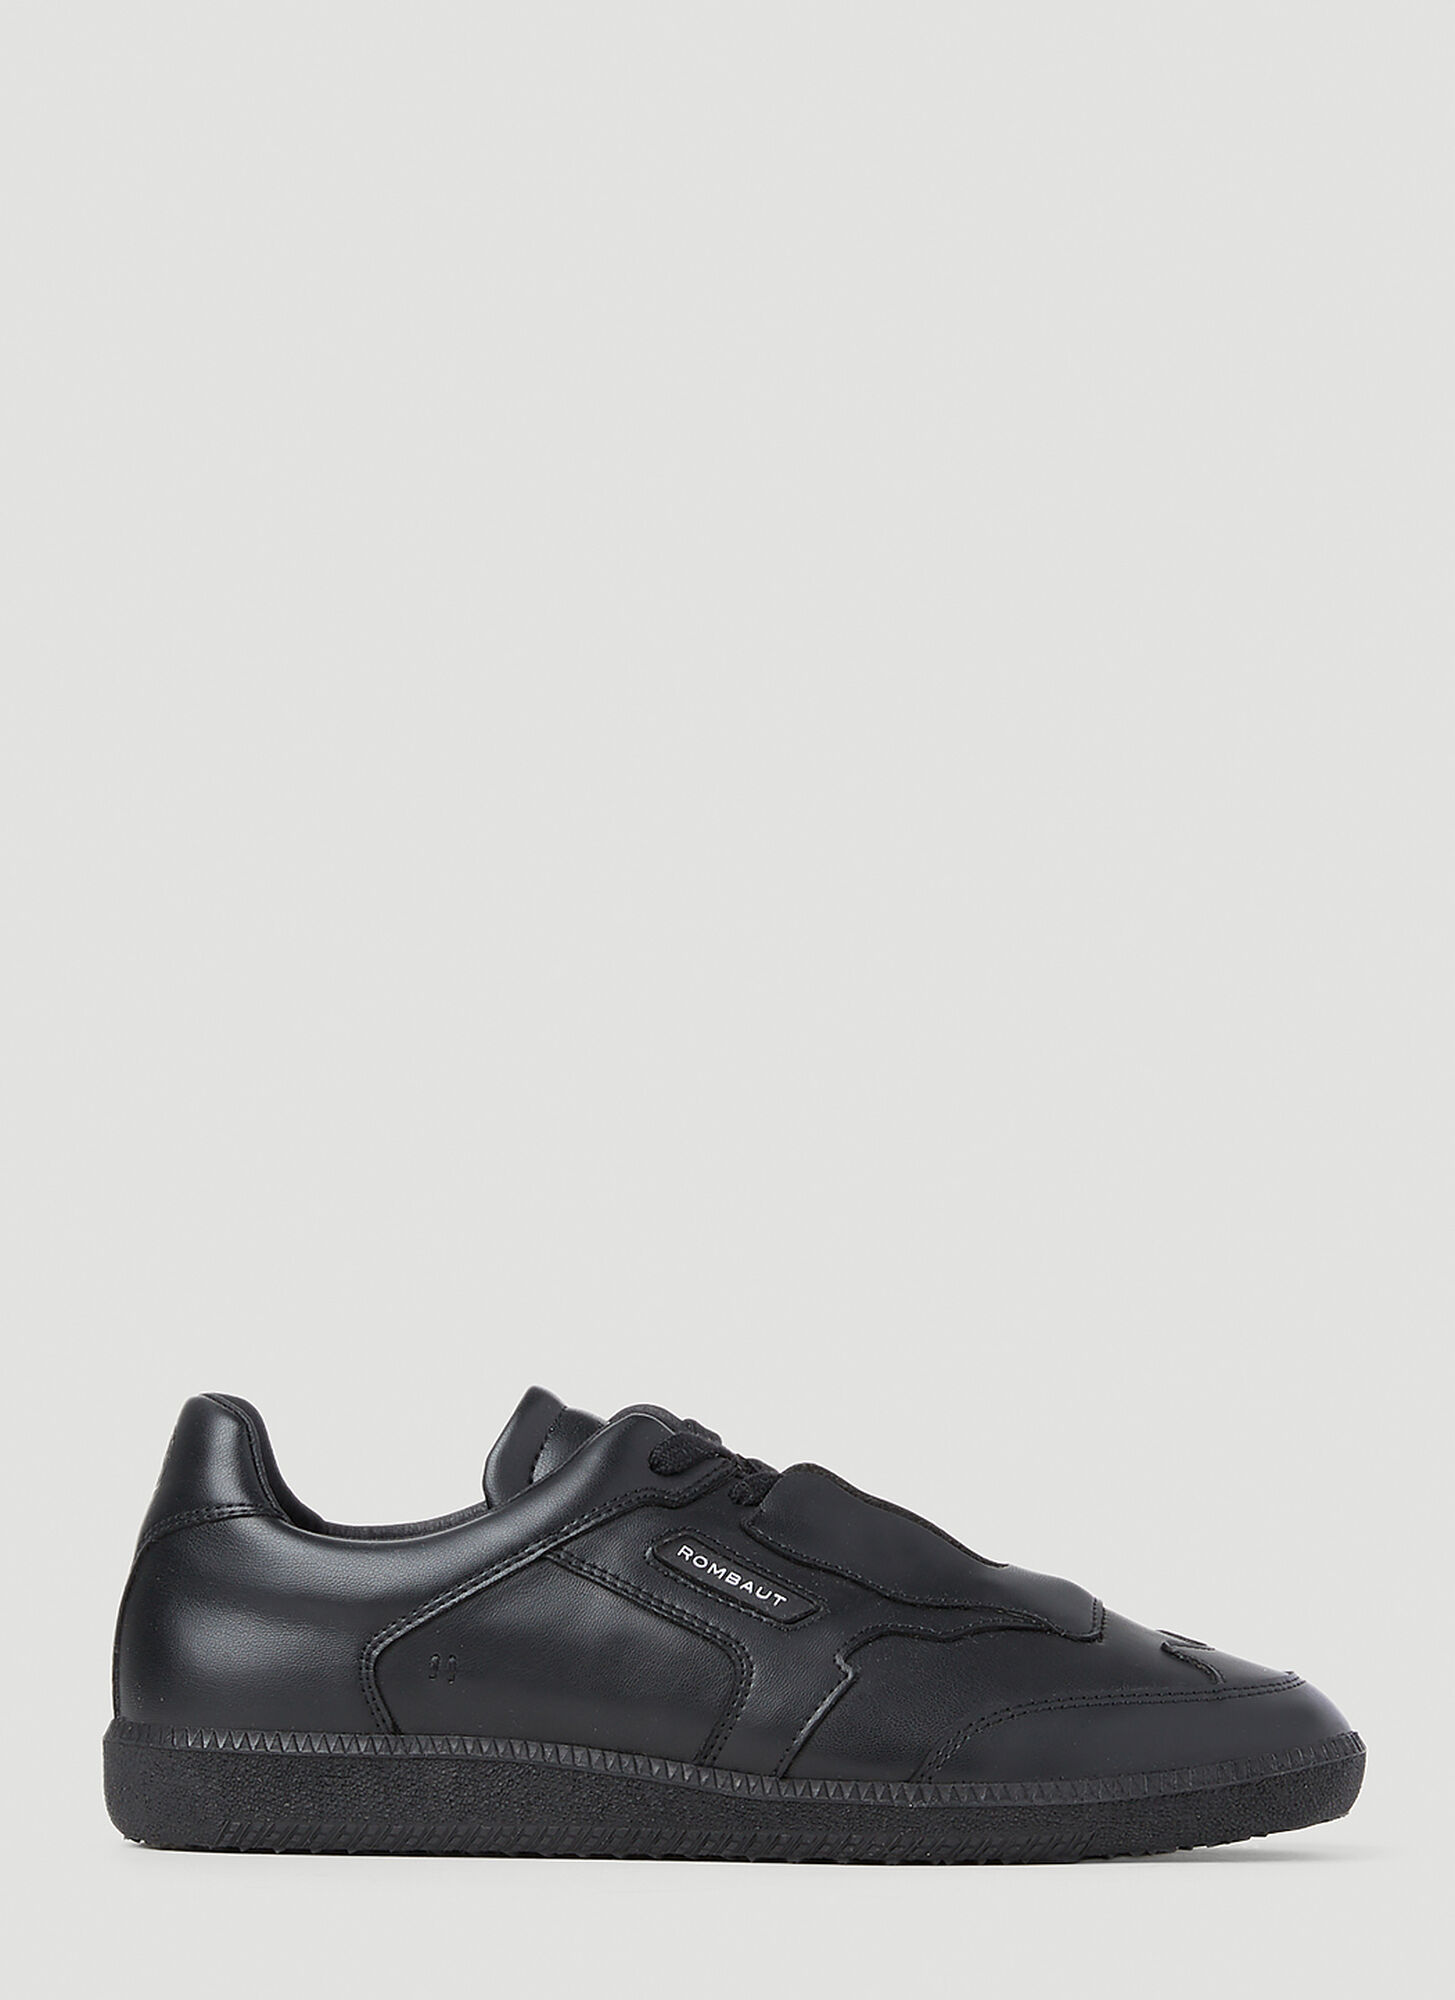 Rombaut Atmoz Sneakers In Black